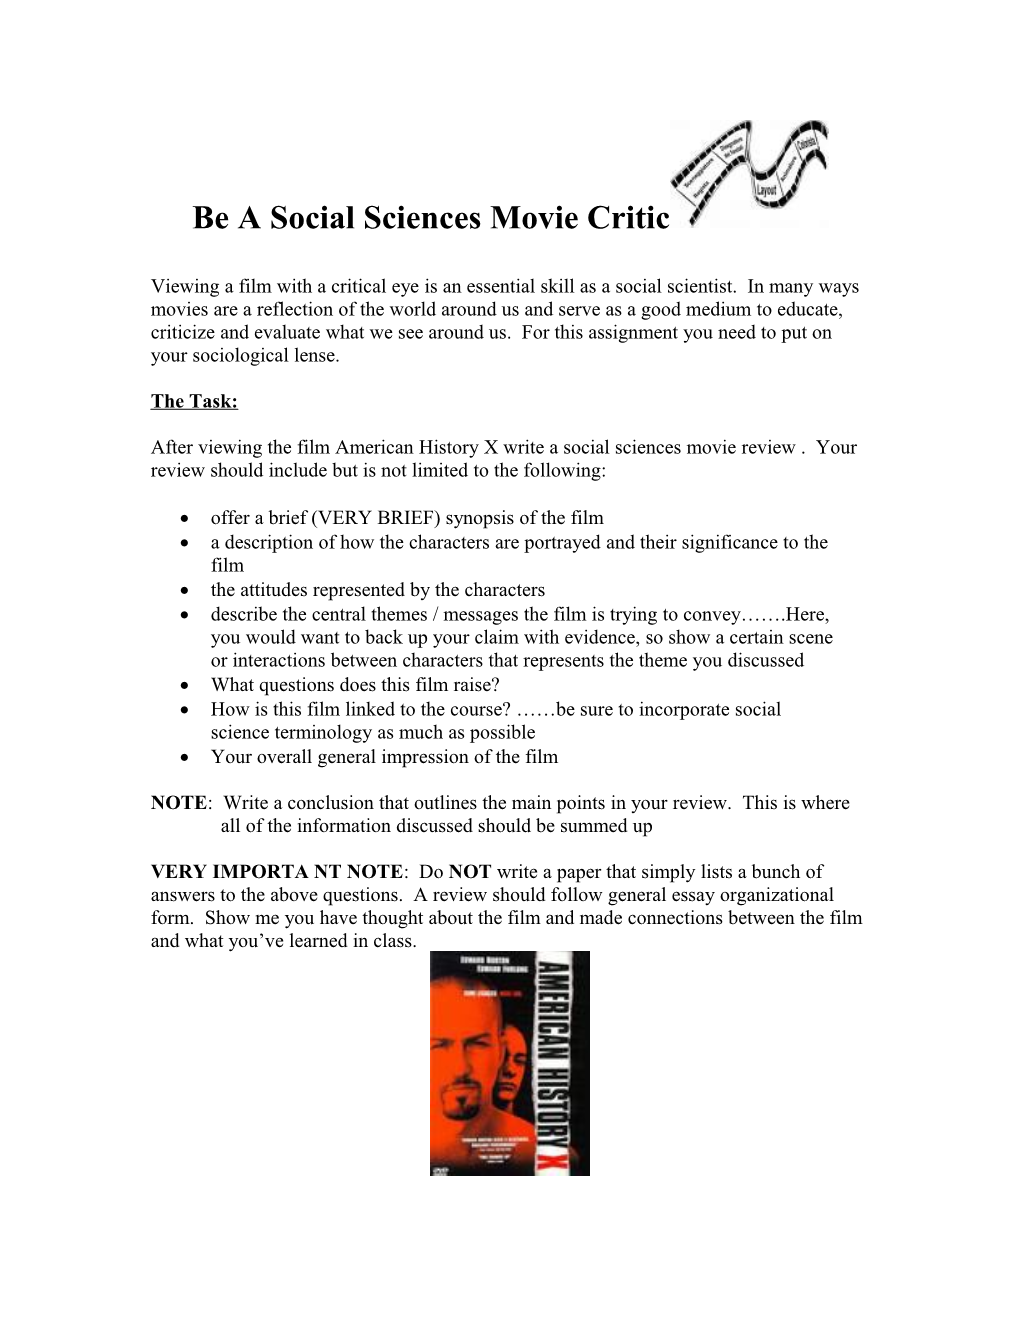 Be a Social Sciences Movie Critic